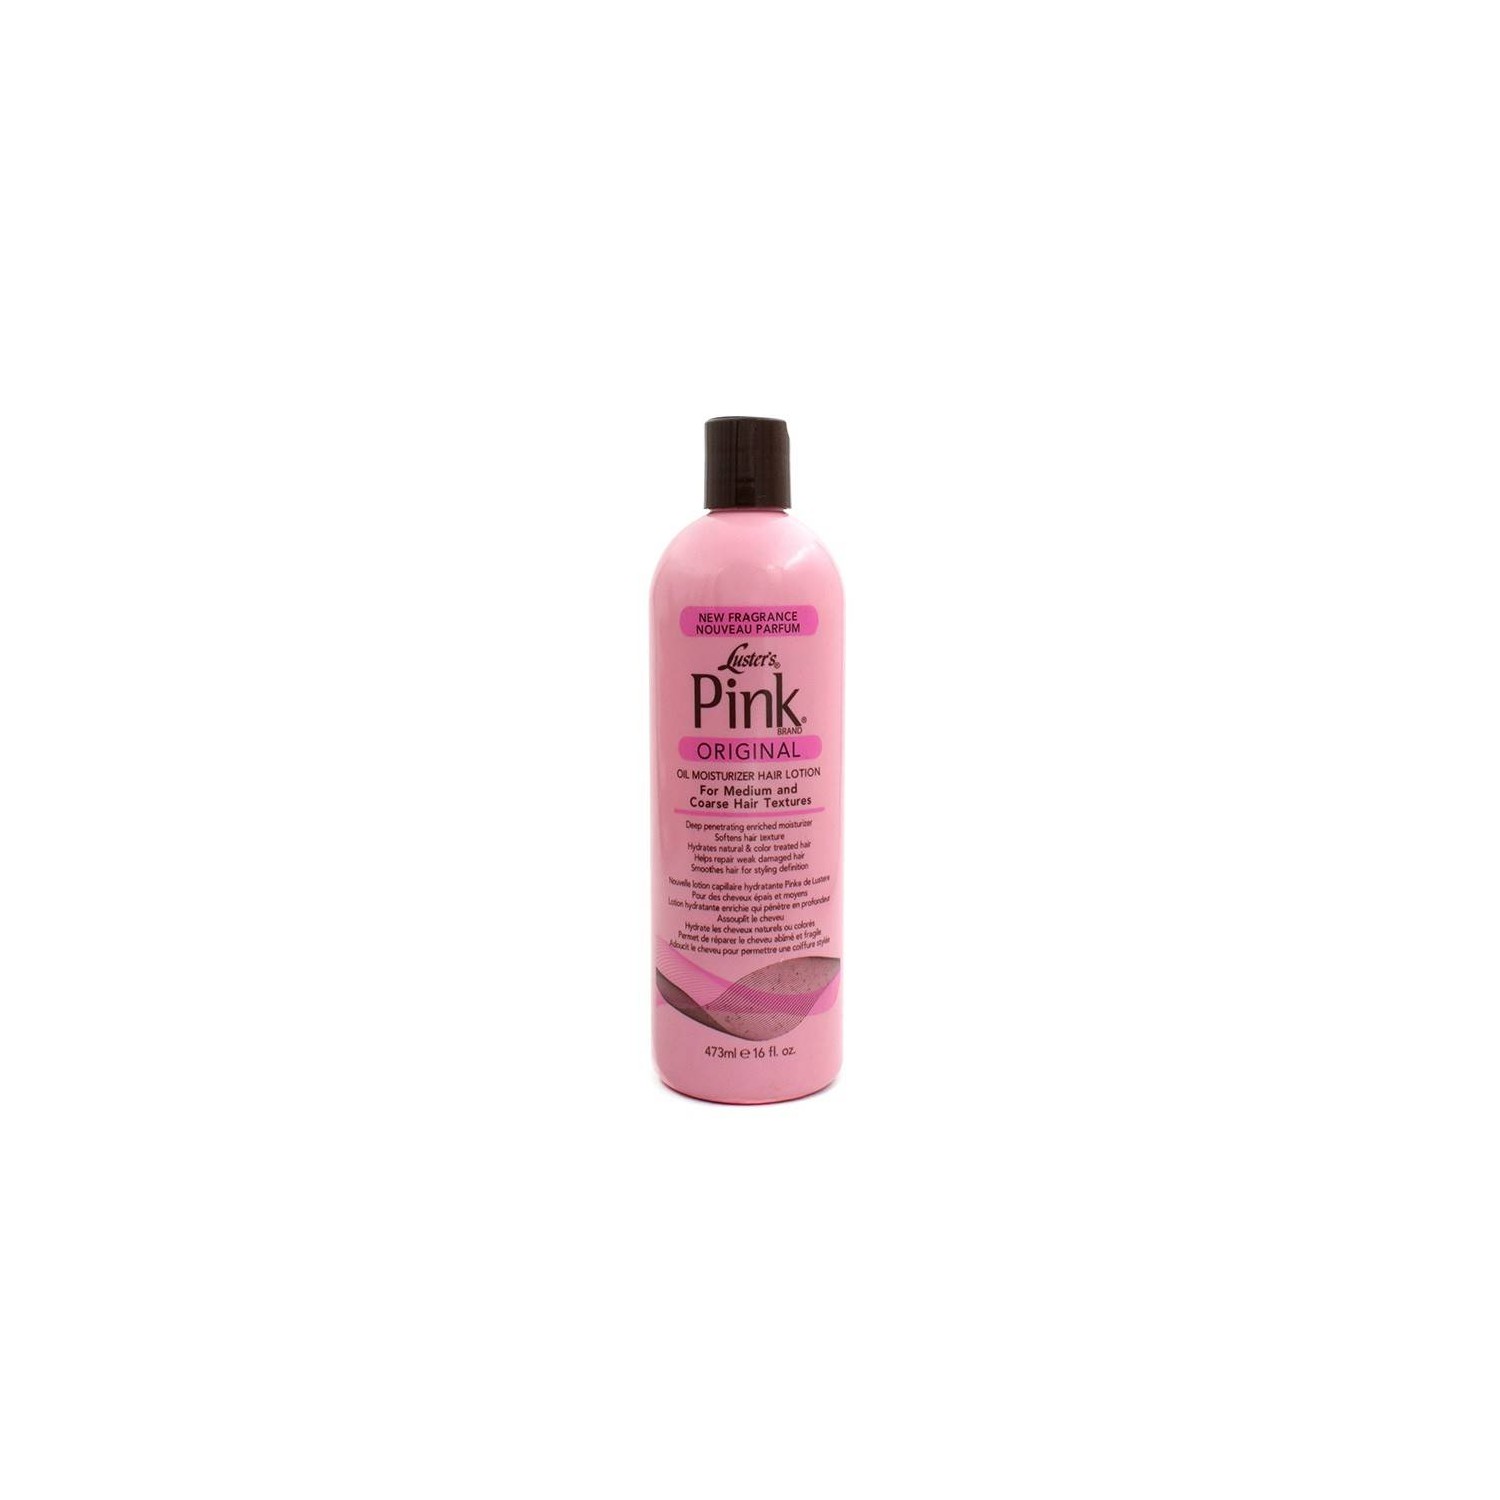 Luster's Pink Oil Idratante Original 473 ml